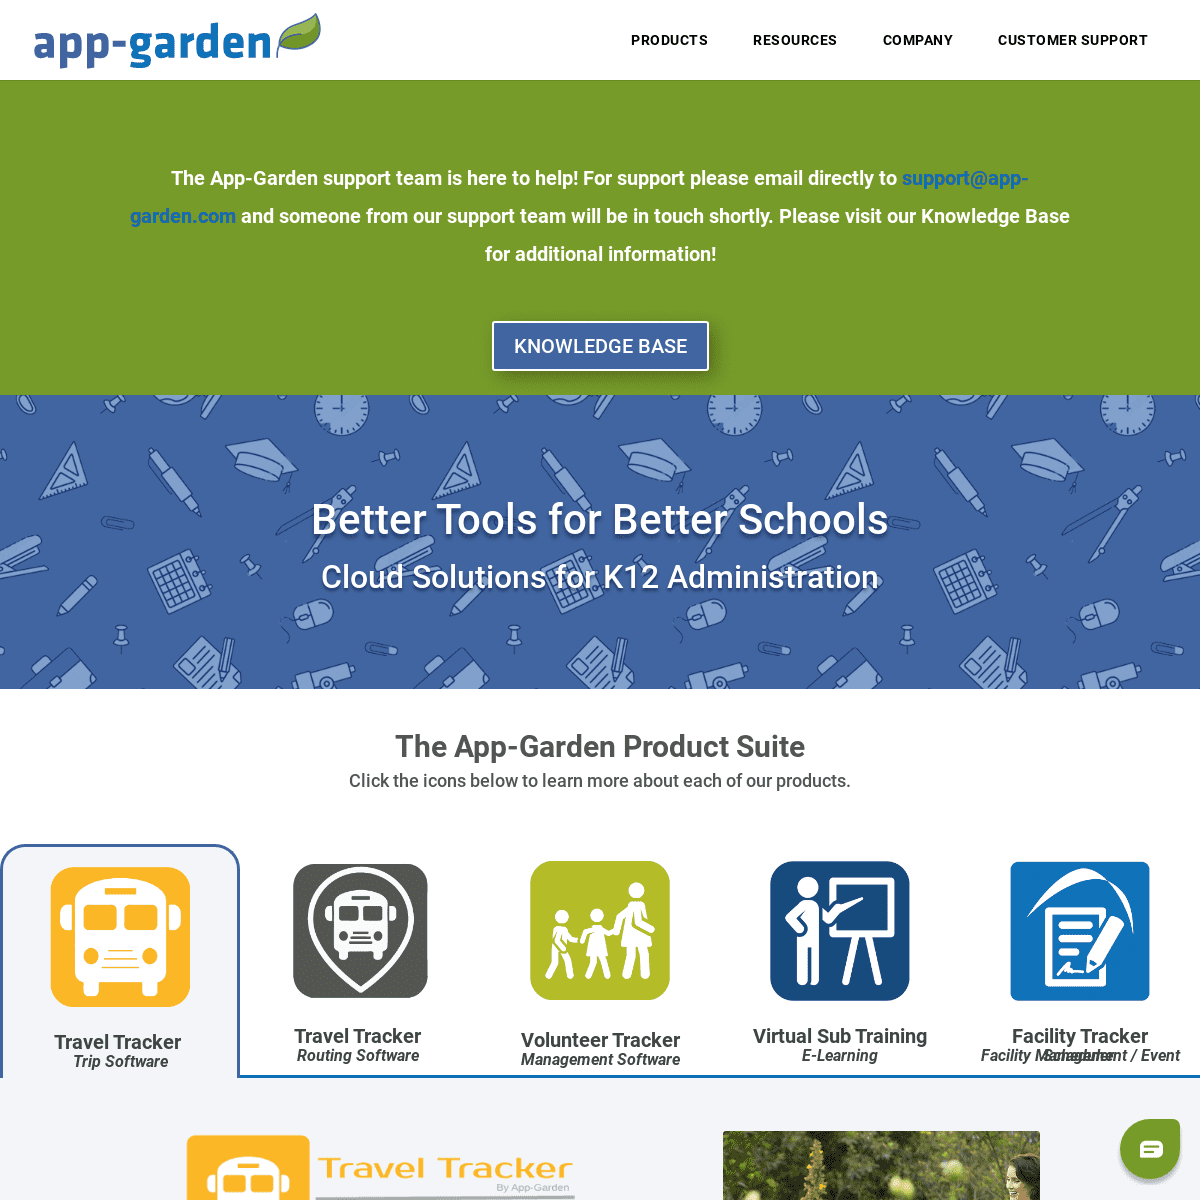 A complete backup of app-garden.com